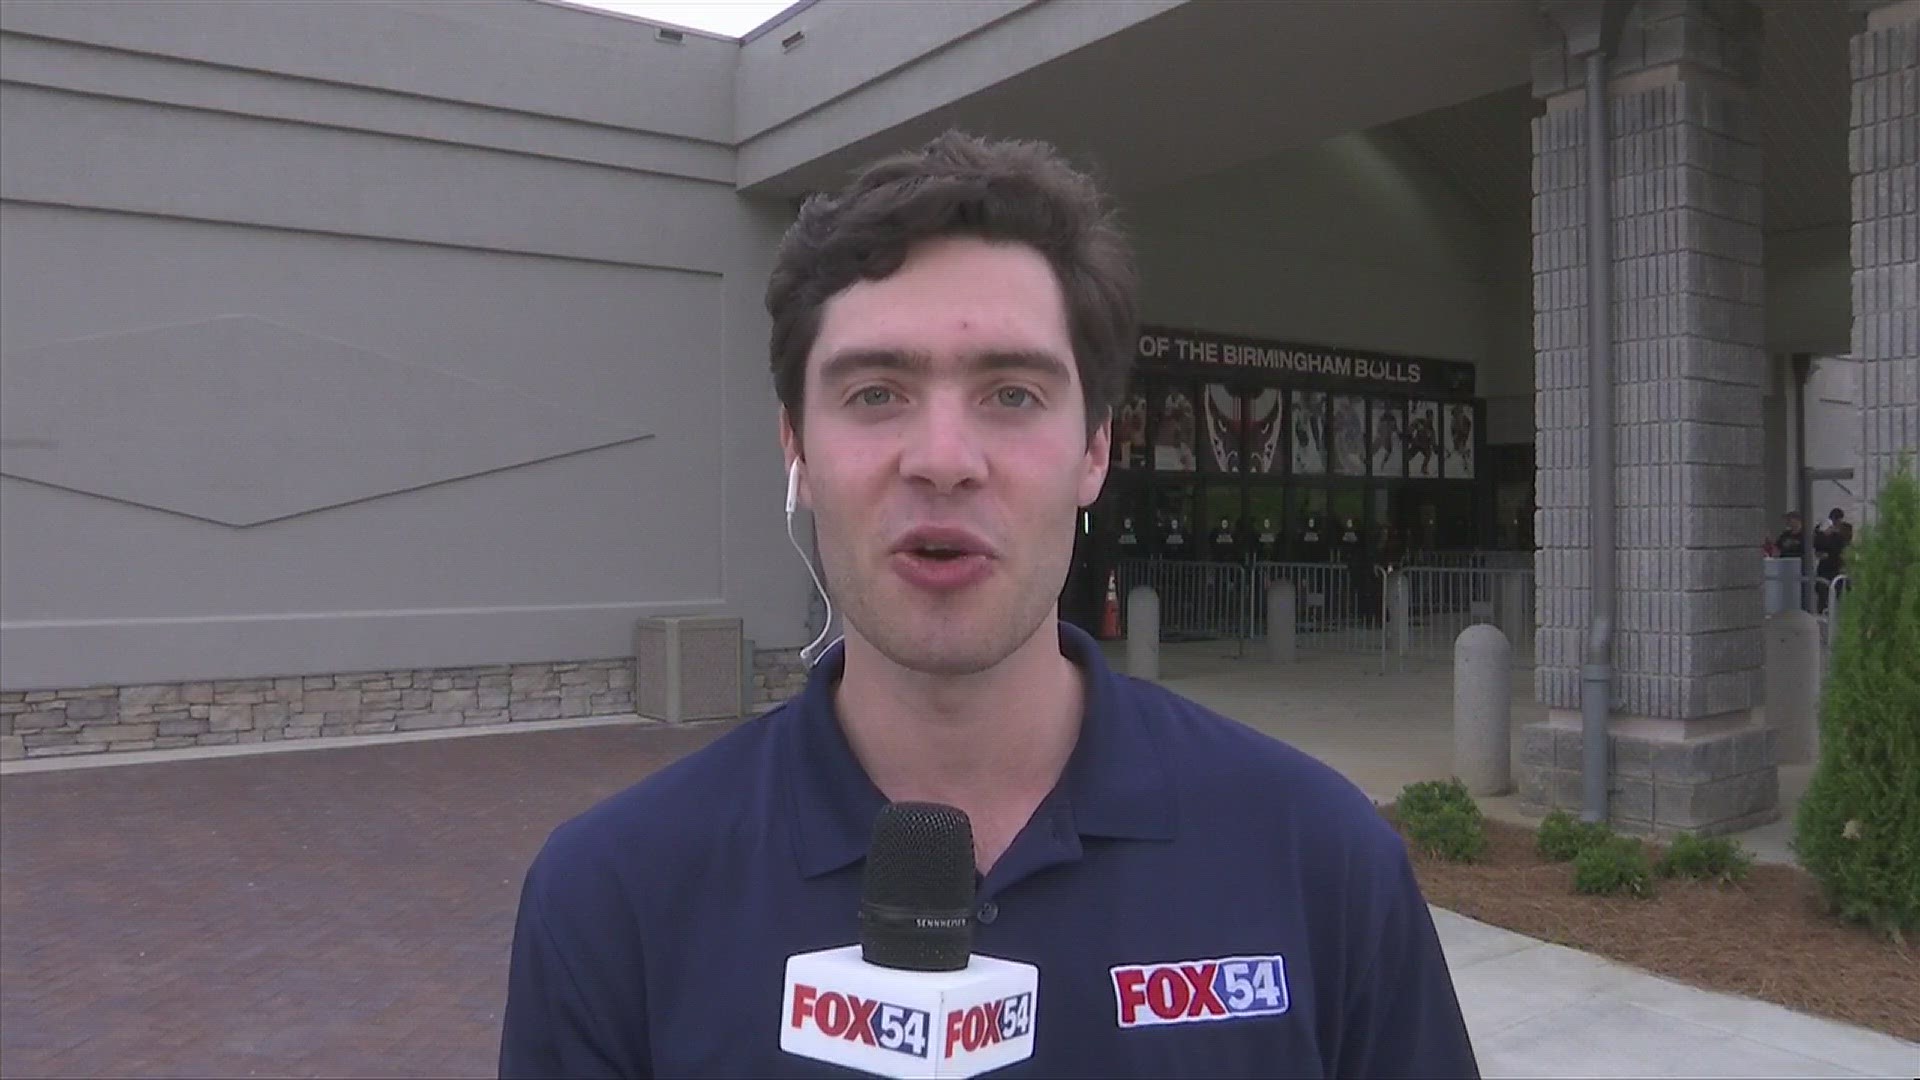 FOX54 Sports' Simon Williams previews game 1 of the SPHL semifinals between the Huntsville Havoc and Birmingham Bulls